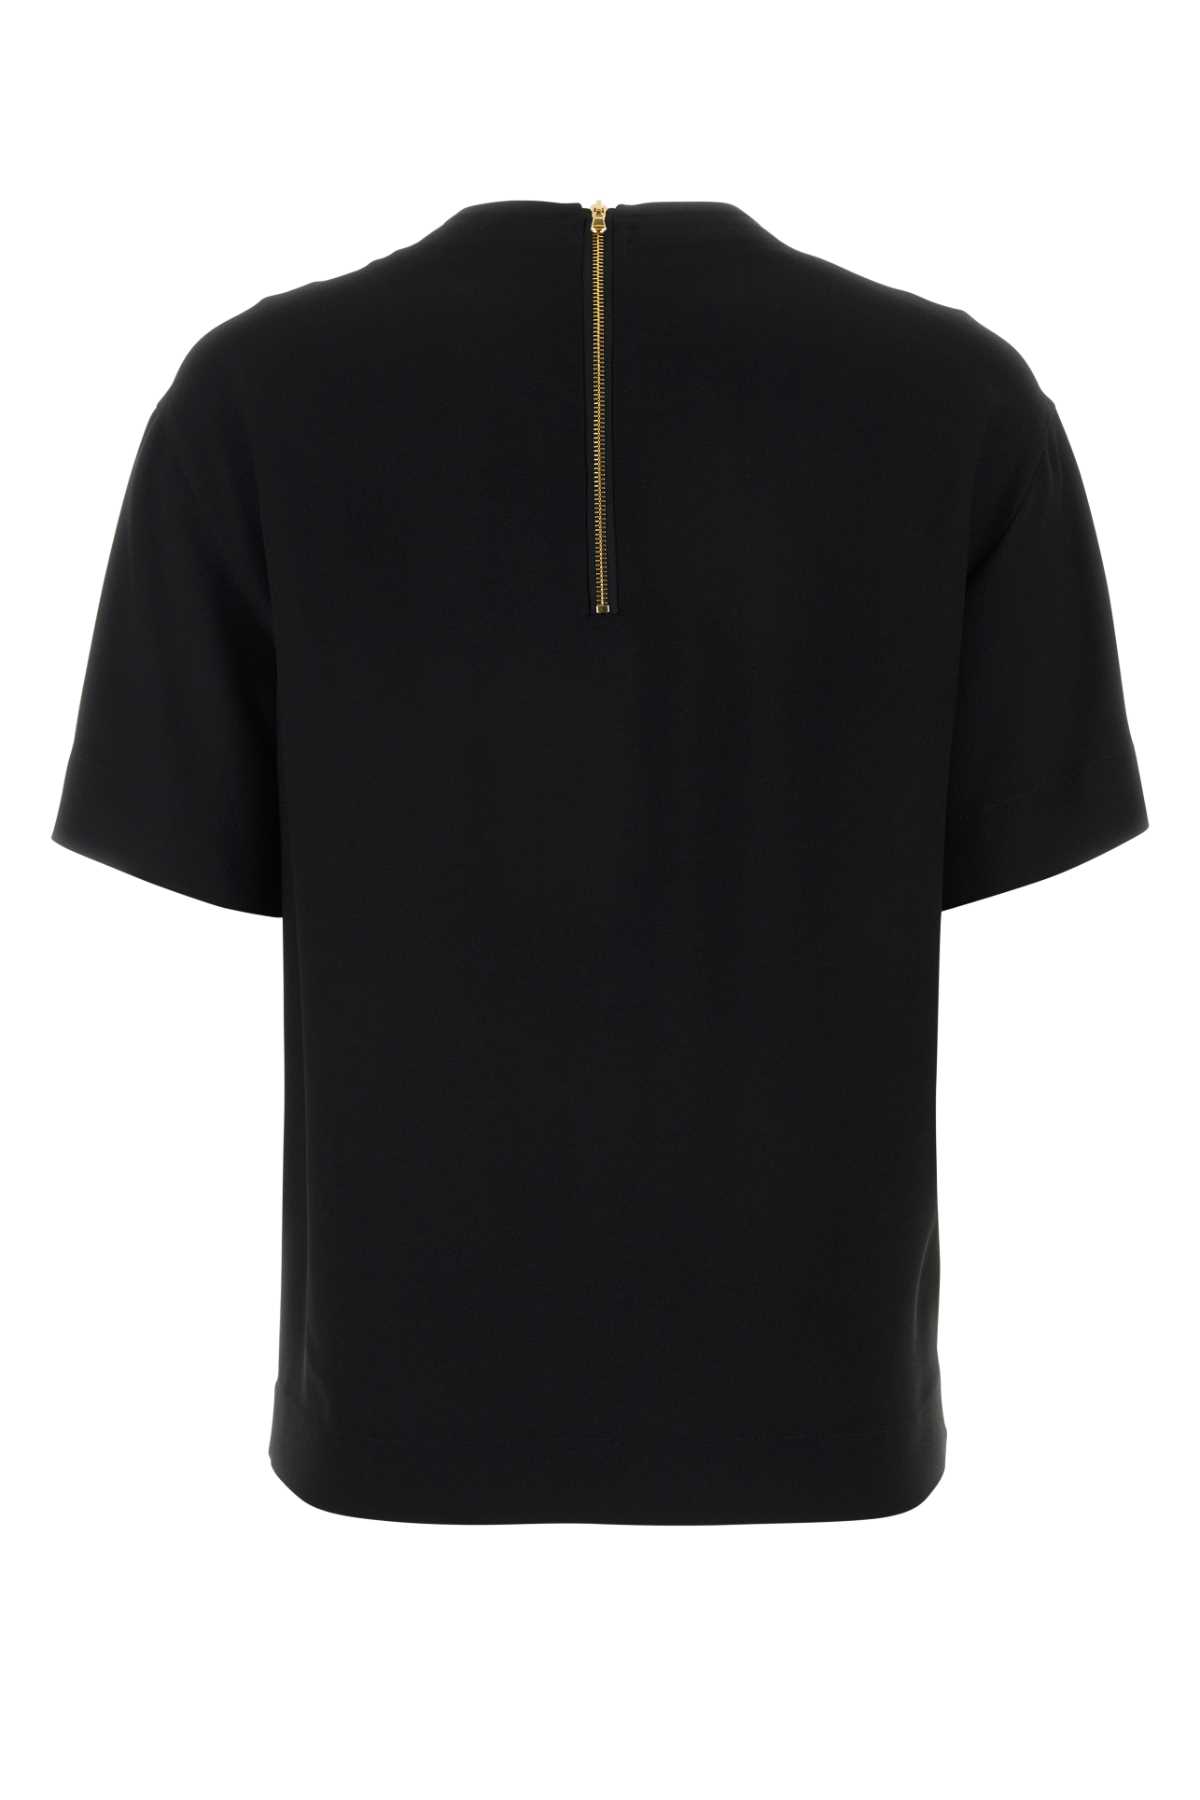 Moschino Black Crepe T-shirt In Fantasianero